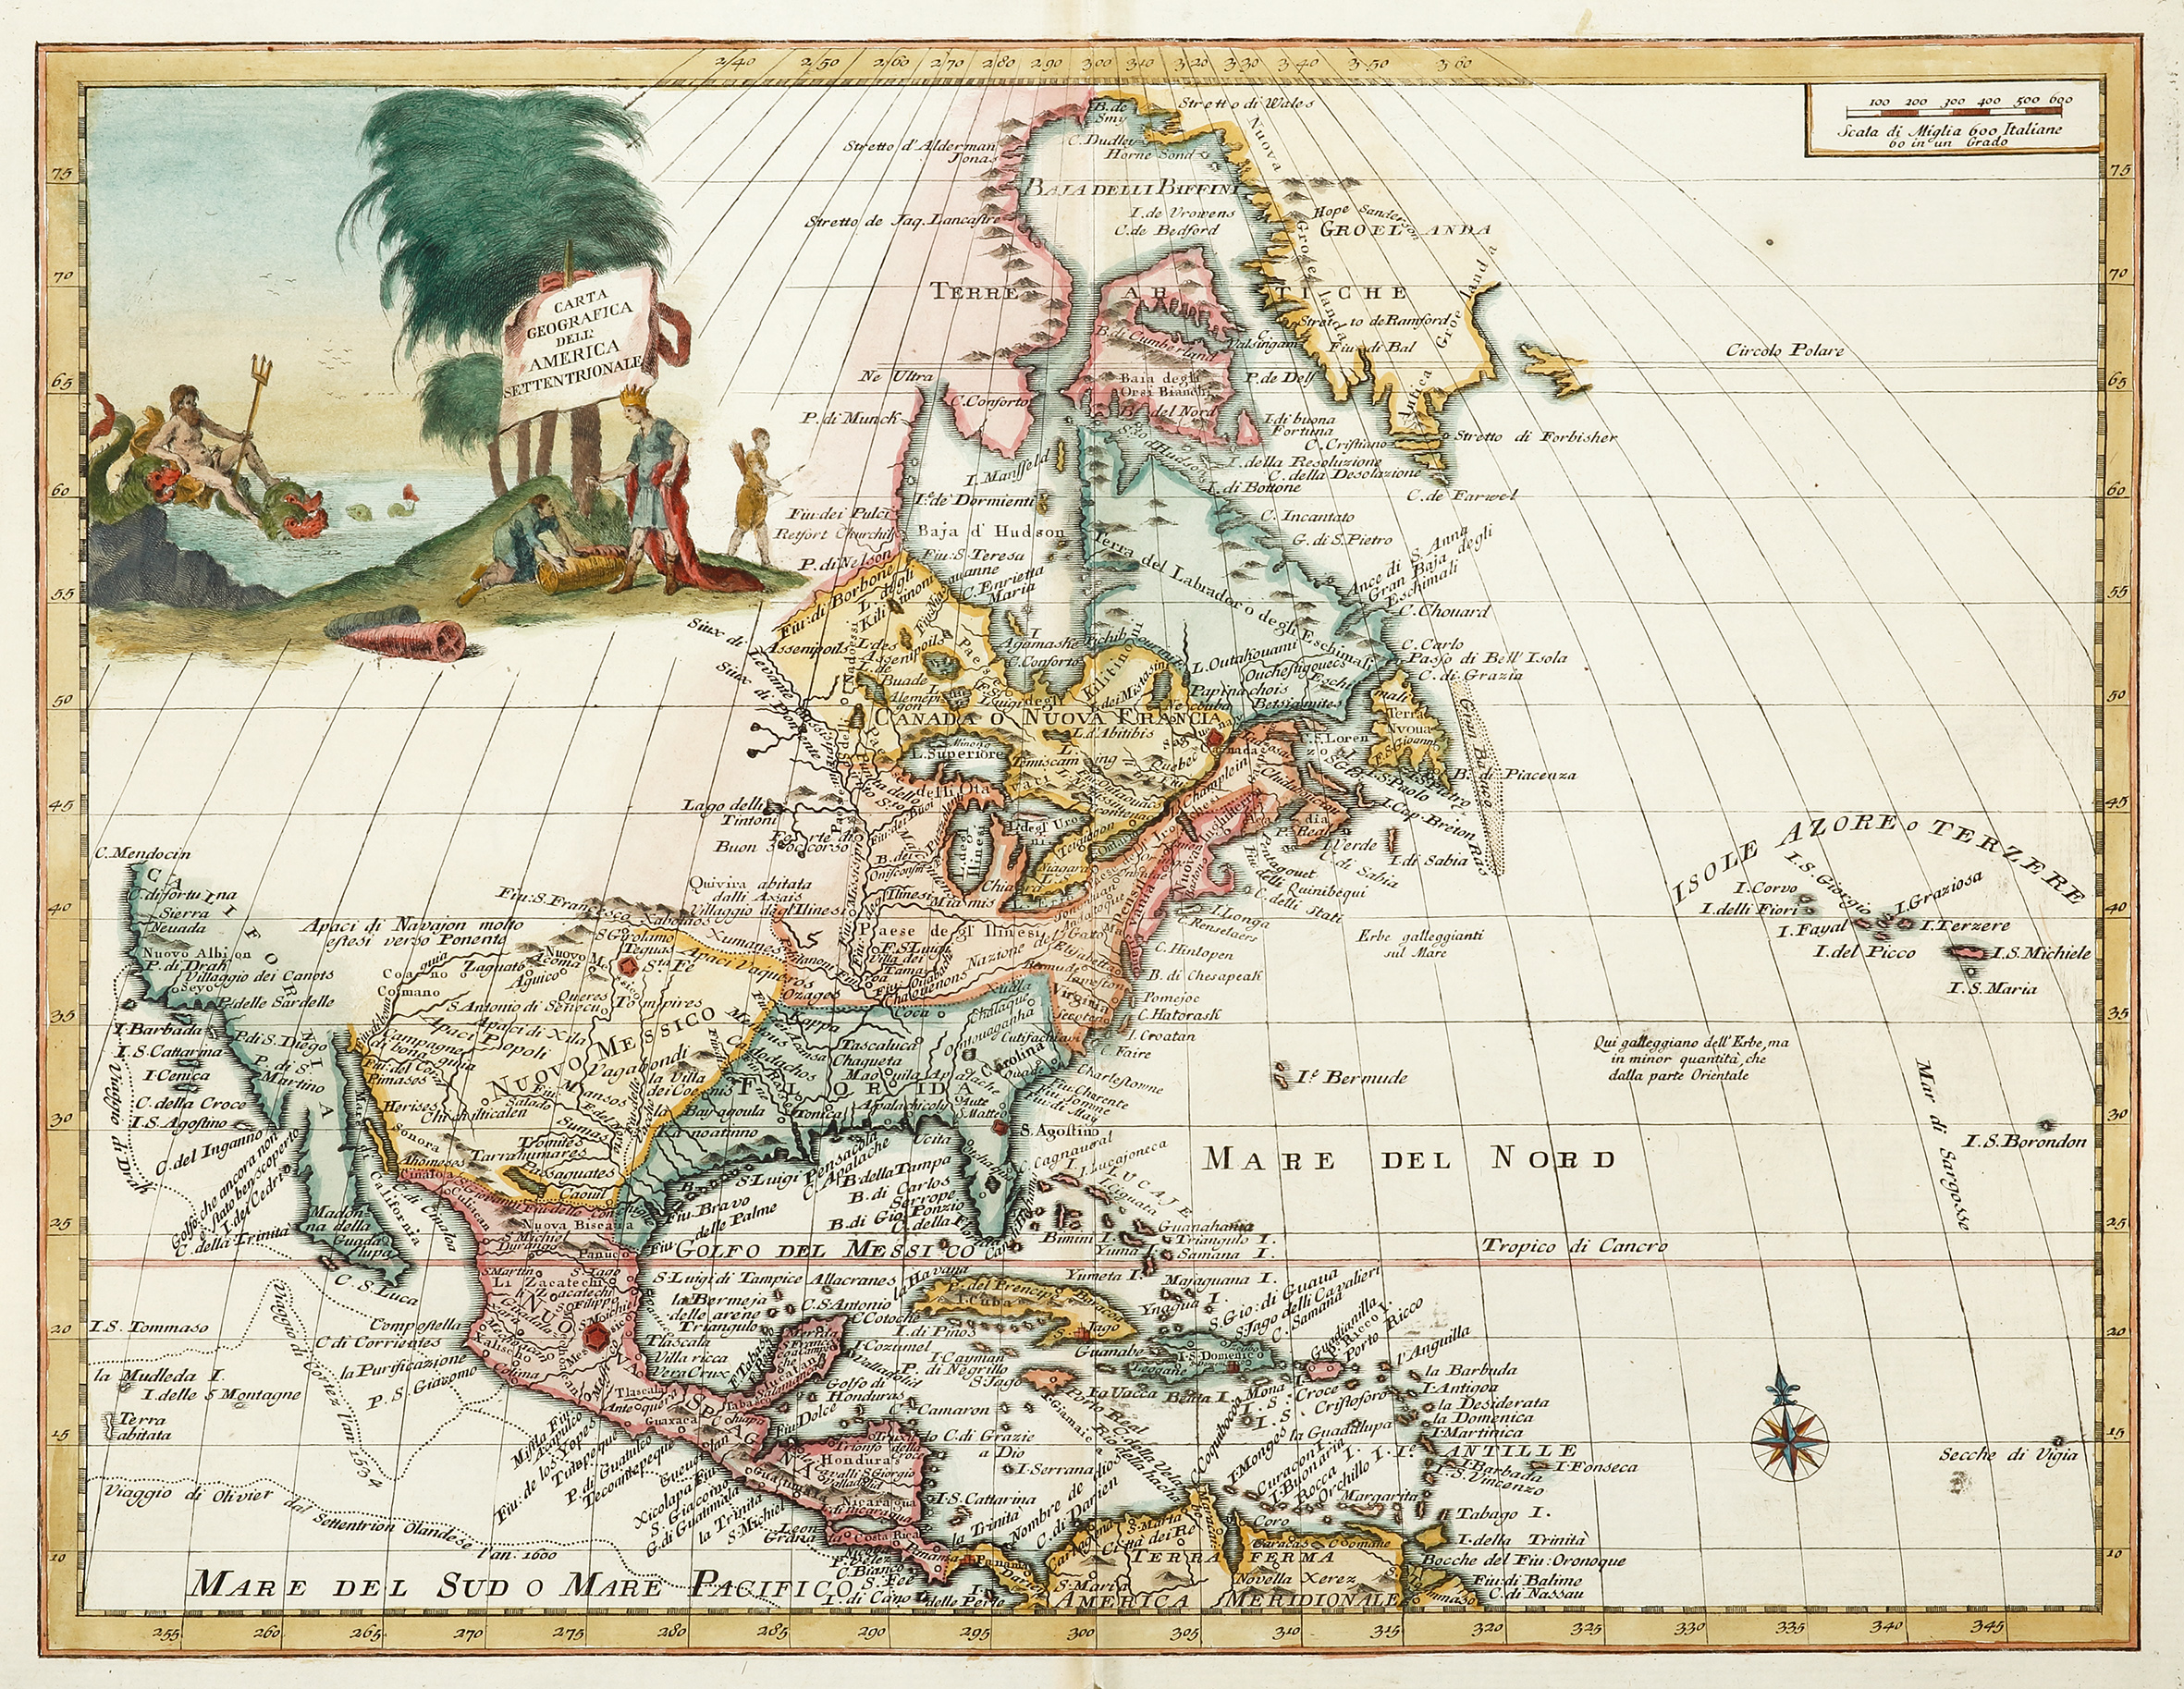 Carta Geografica dell' America Settentrionale - Antique Map from 1750